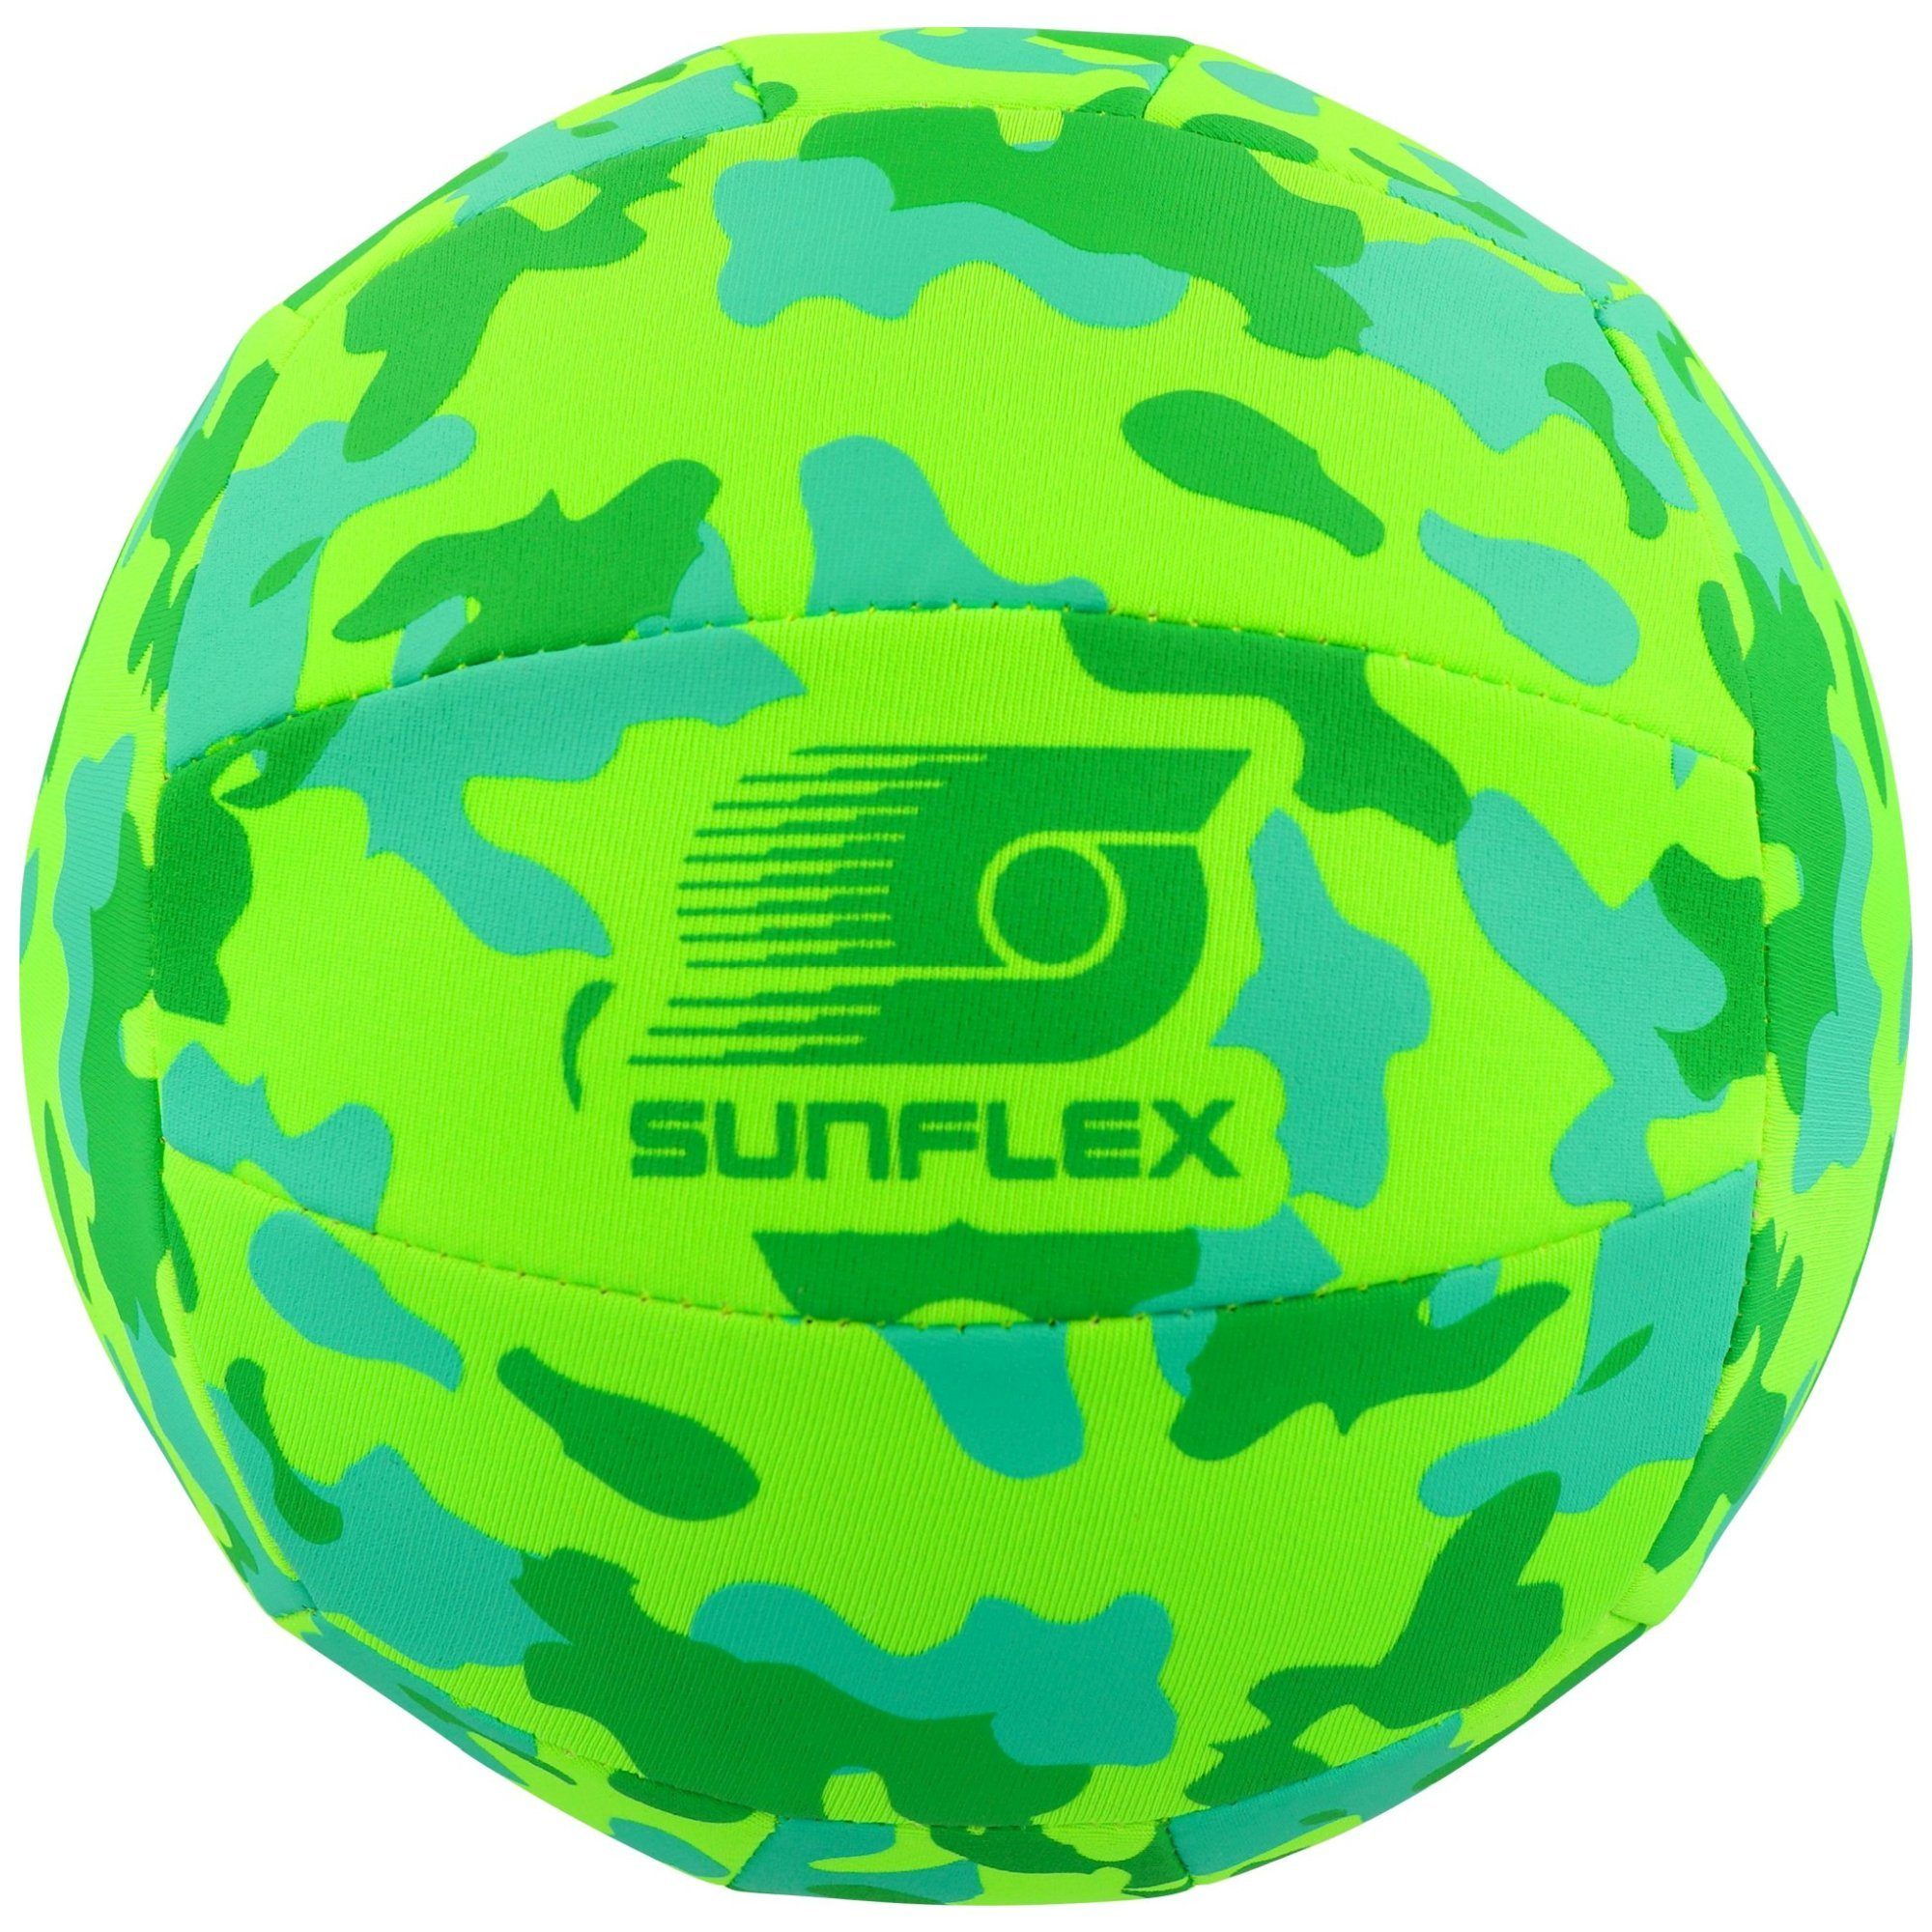 Sunflex Beachsoccerball sunflex Camo grün 5 Size Funball und Beach